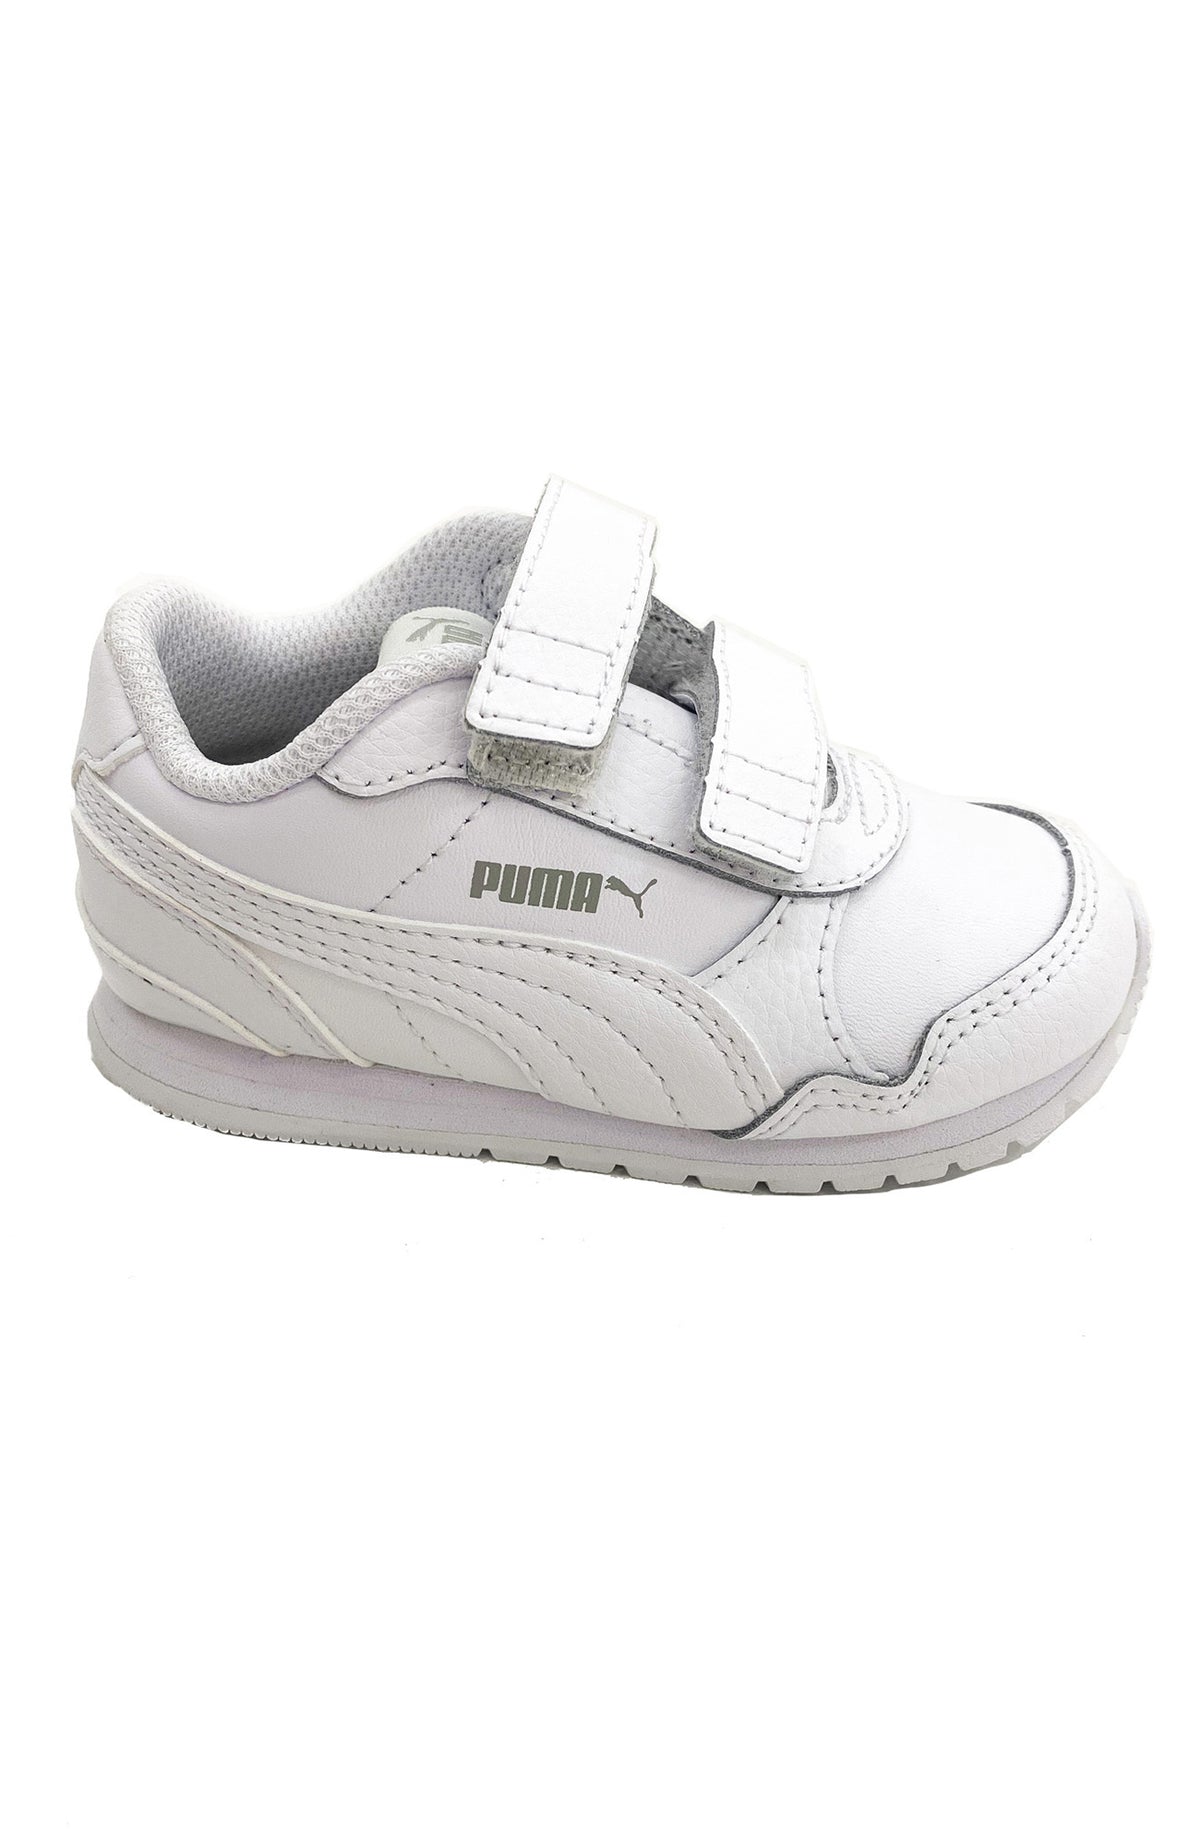 Buy Puma Unisex Adult ST Runner v2 Sneakers Black-Castlerock-White Leather  Sneakers-11 UK (46 EU) (12 US) (36527708) at Amazon.in